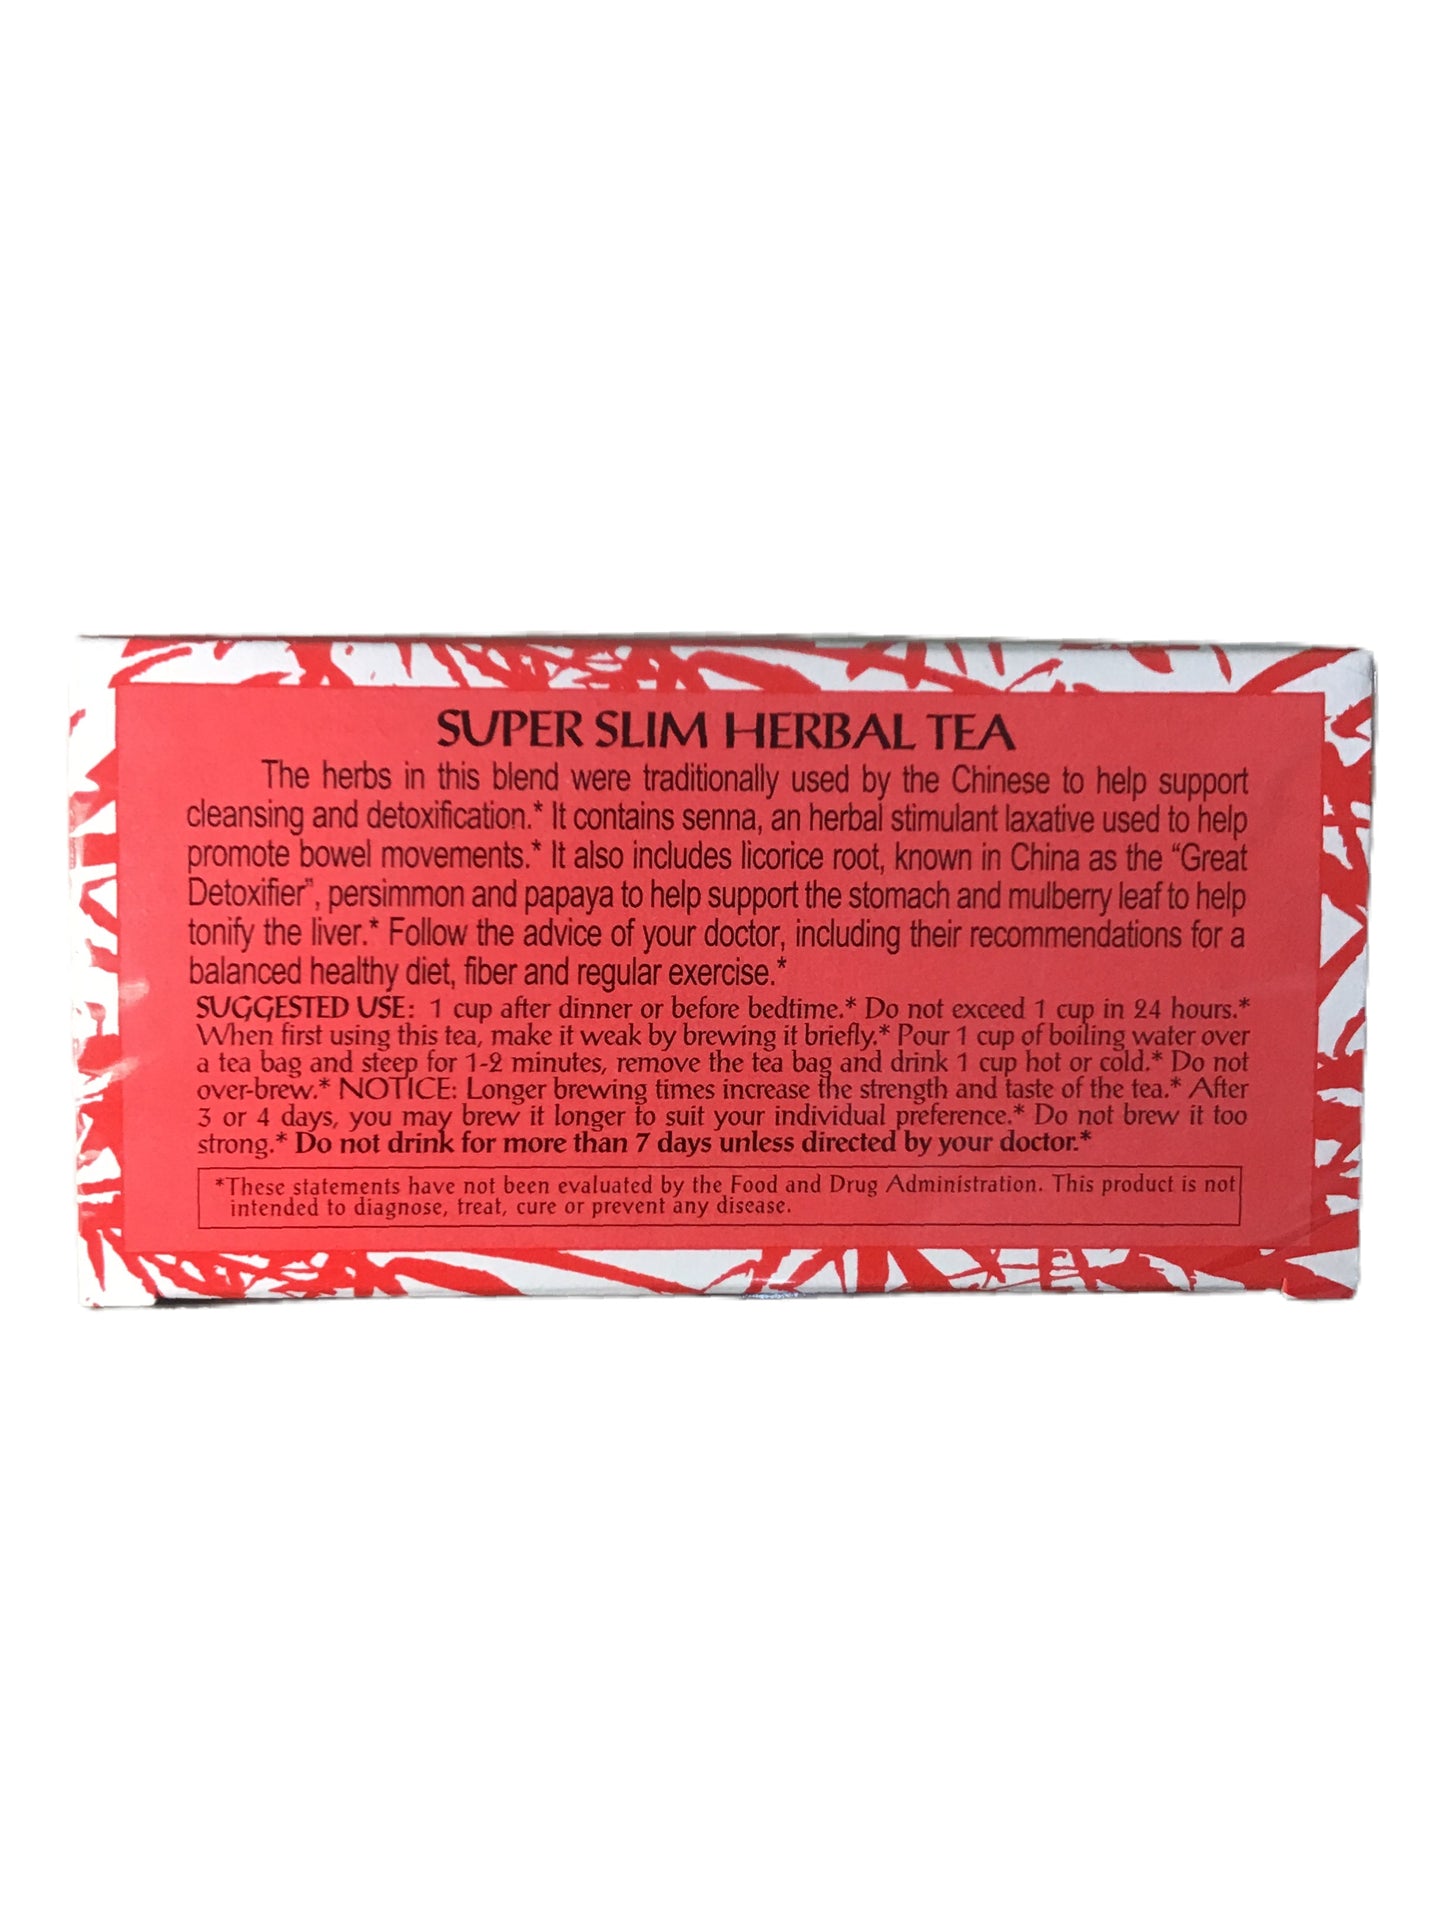 Triple Leaf Brand Super Slim Herbal Tea 超级减肥茶